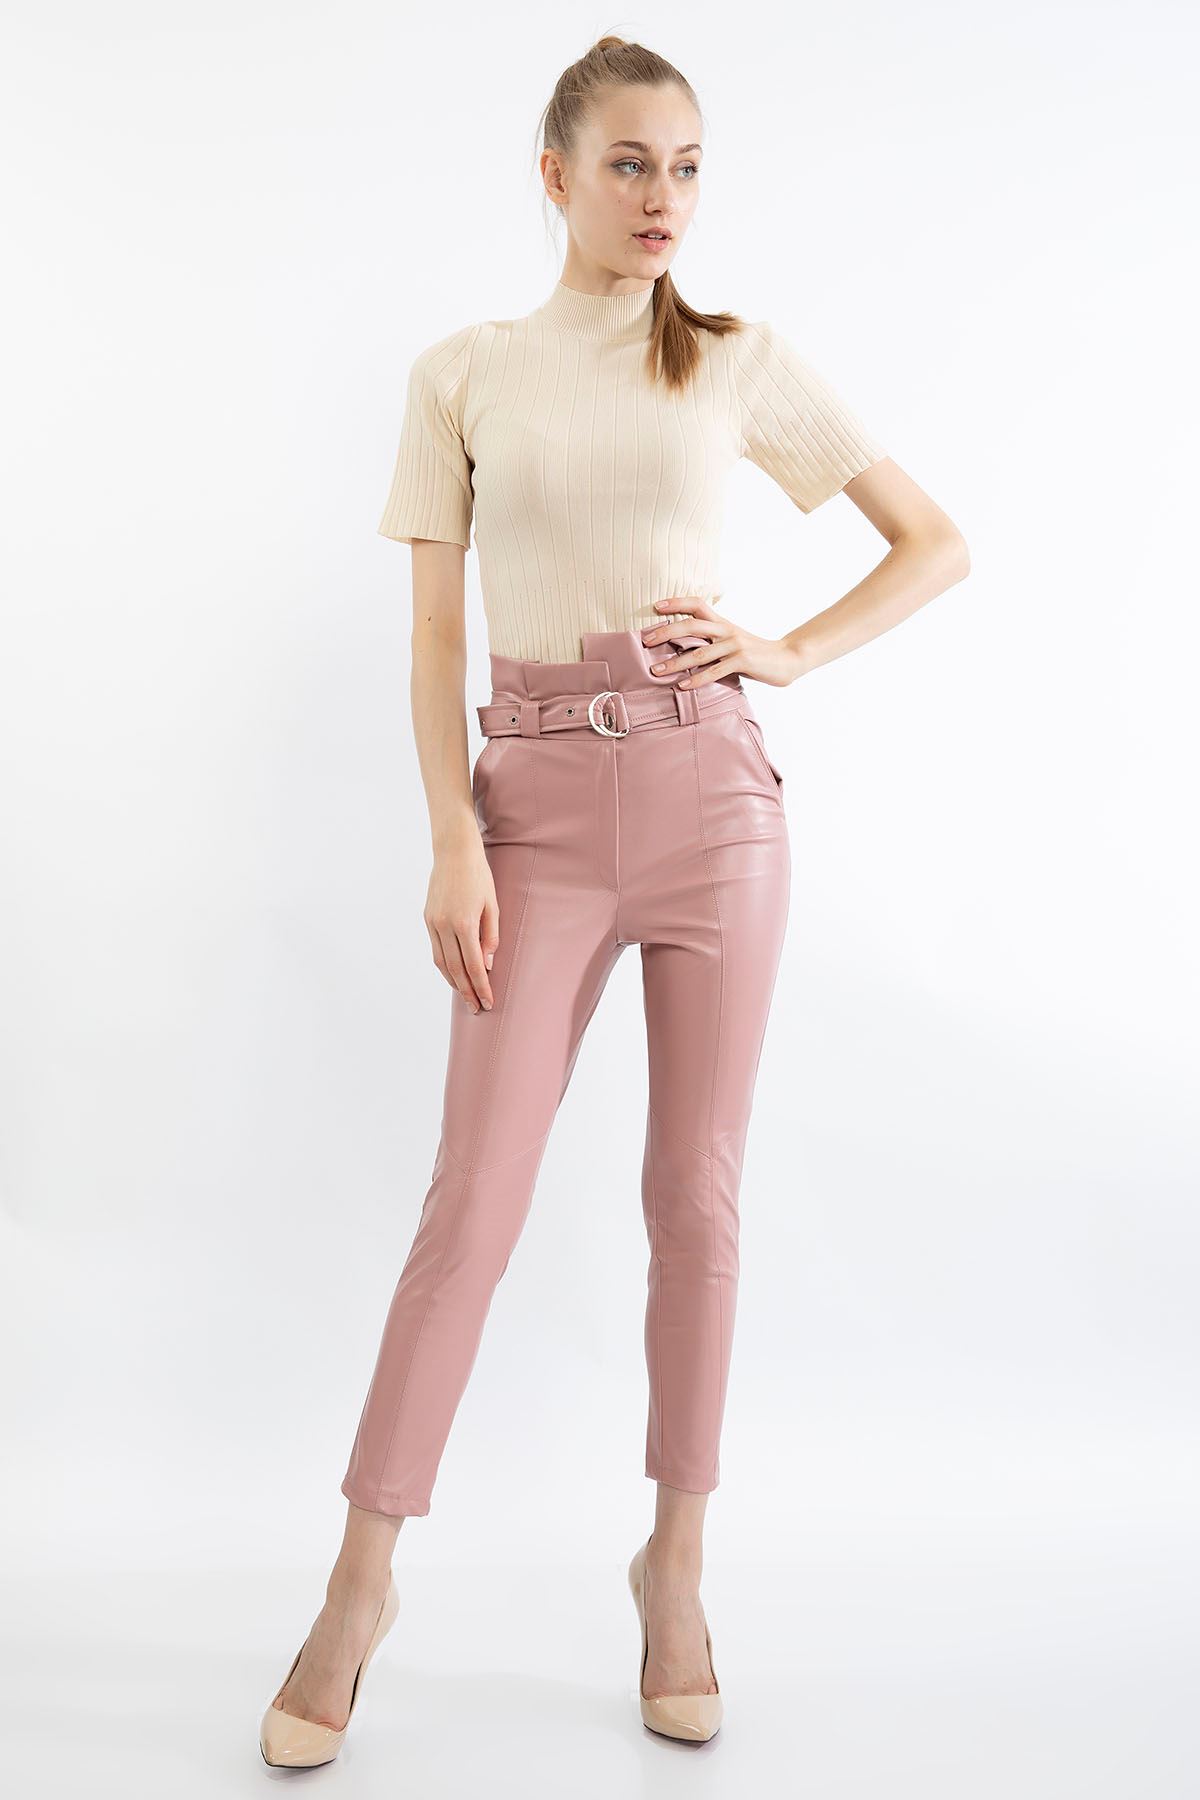 Zara Leather Fabric Ankle Length Tight Fit High Waist Belt Women'S Trouser - Light Pink